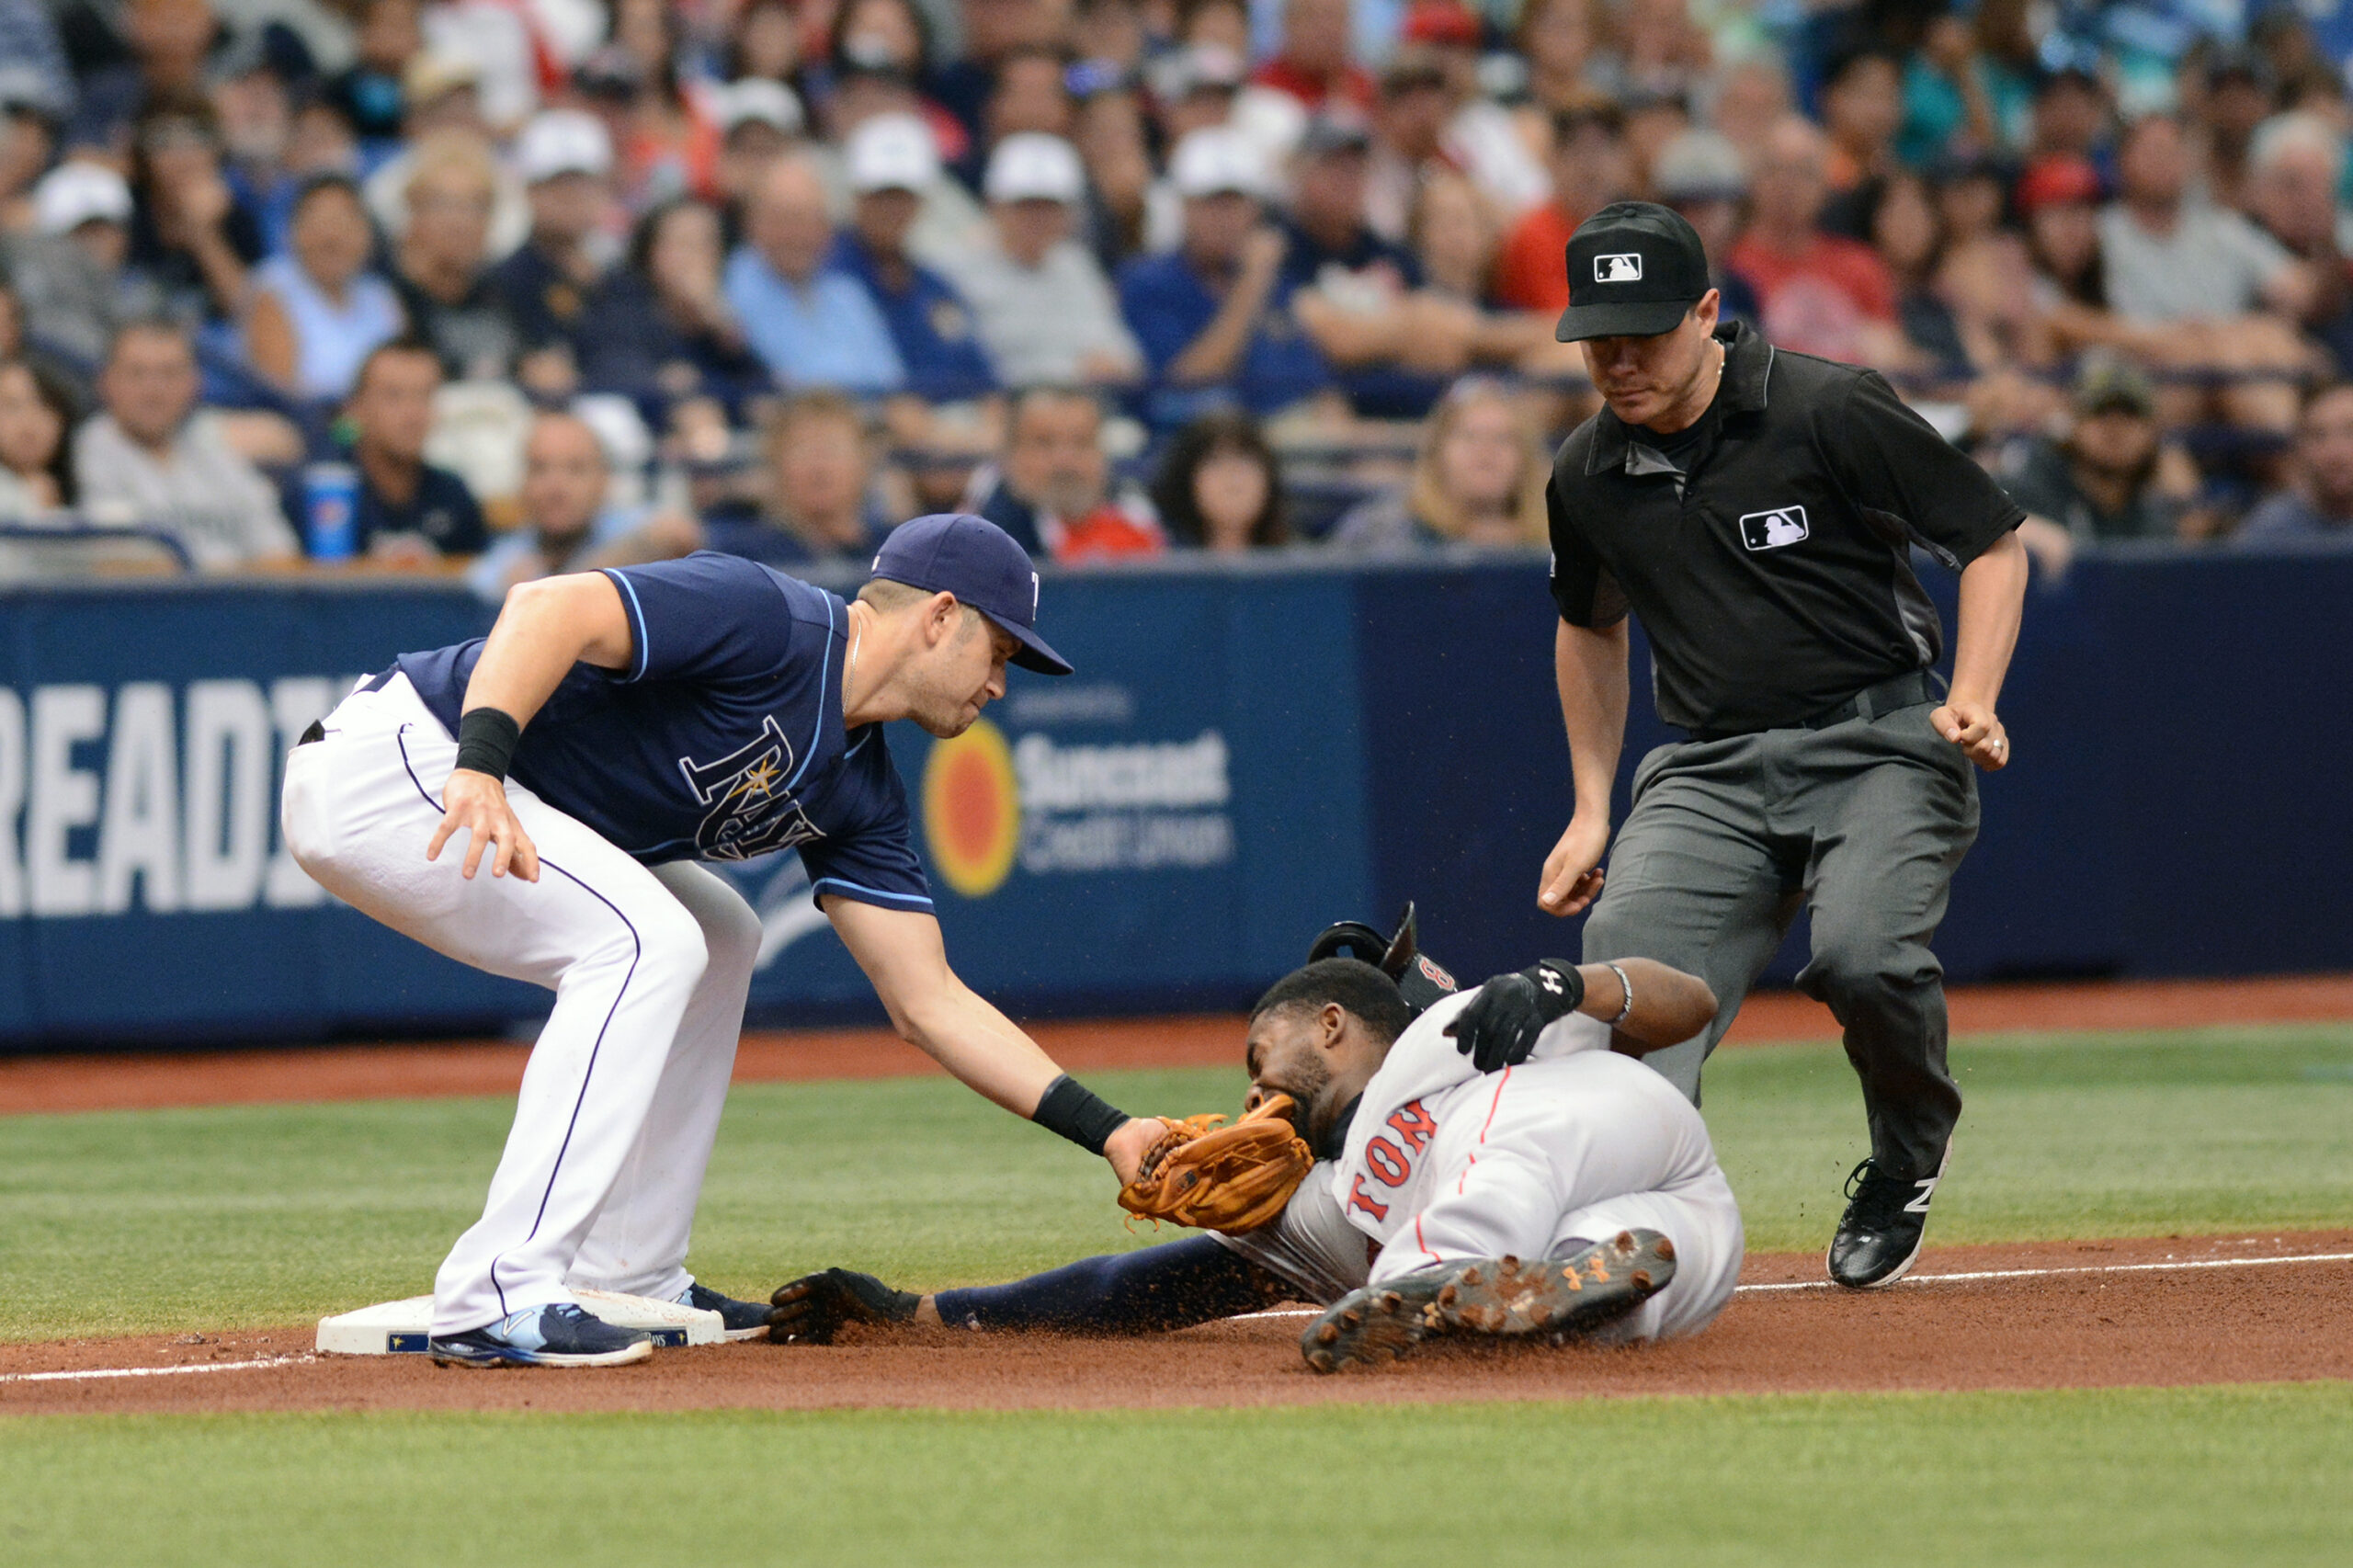 A baseball player slides to a base as a baseman tags him with a baseball in his mitt. An umpire follows the slider behind him.